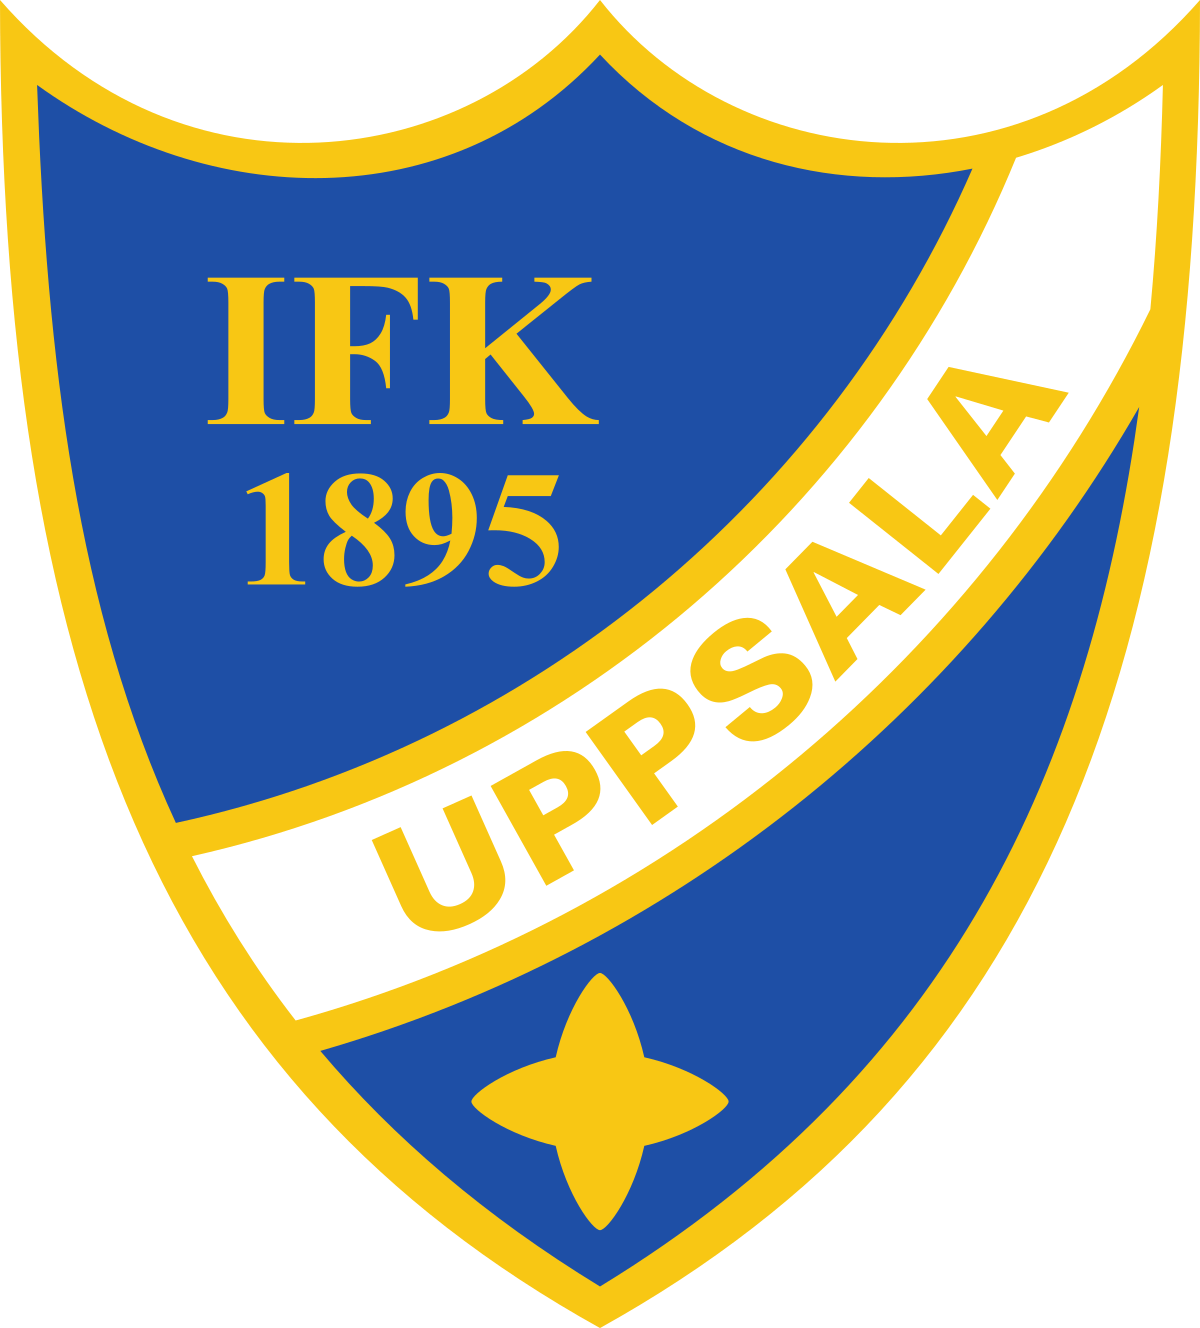 IFK Uppsala 2